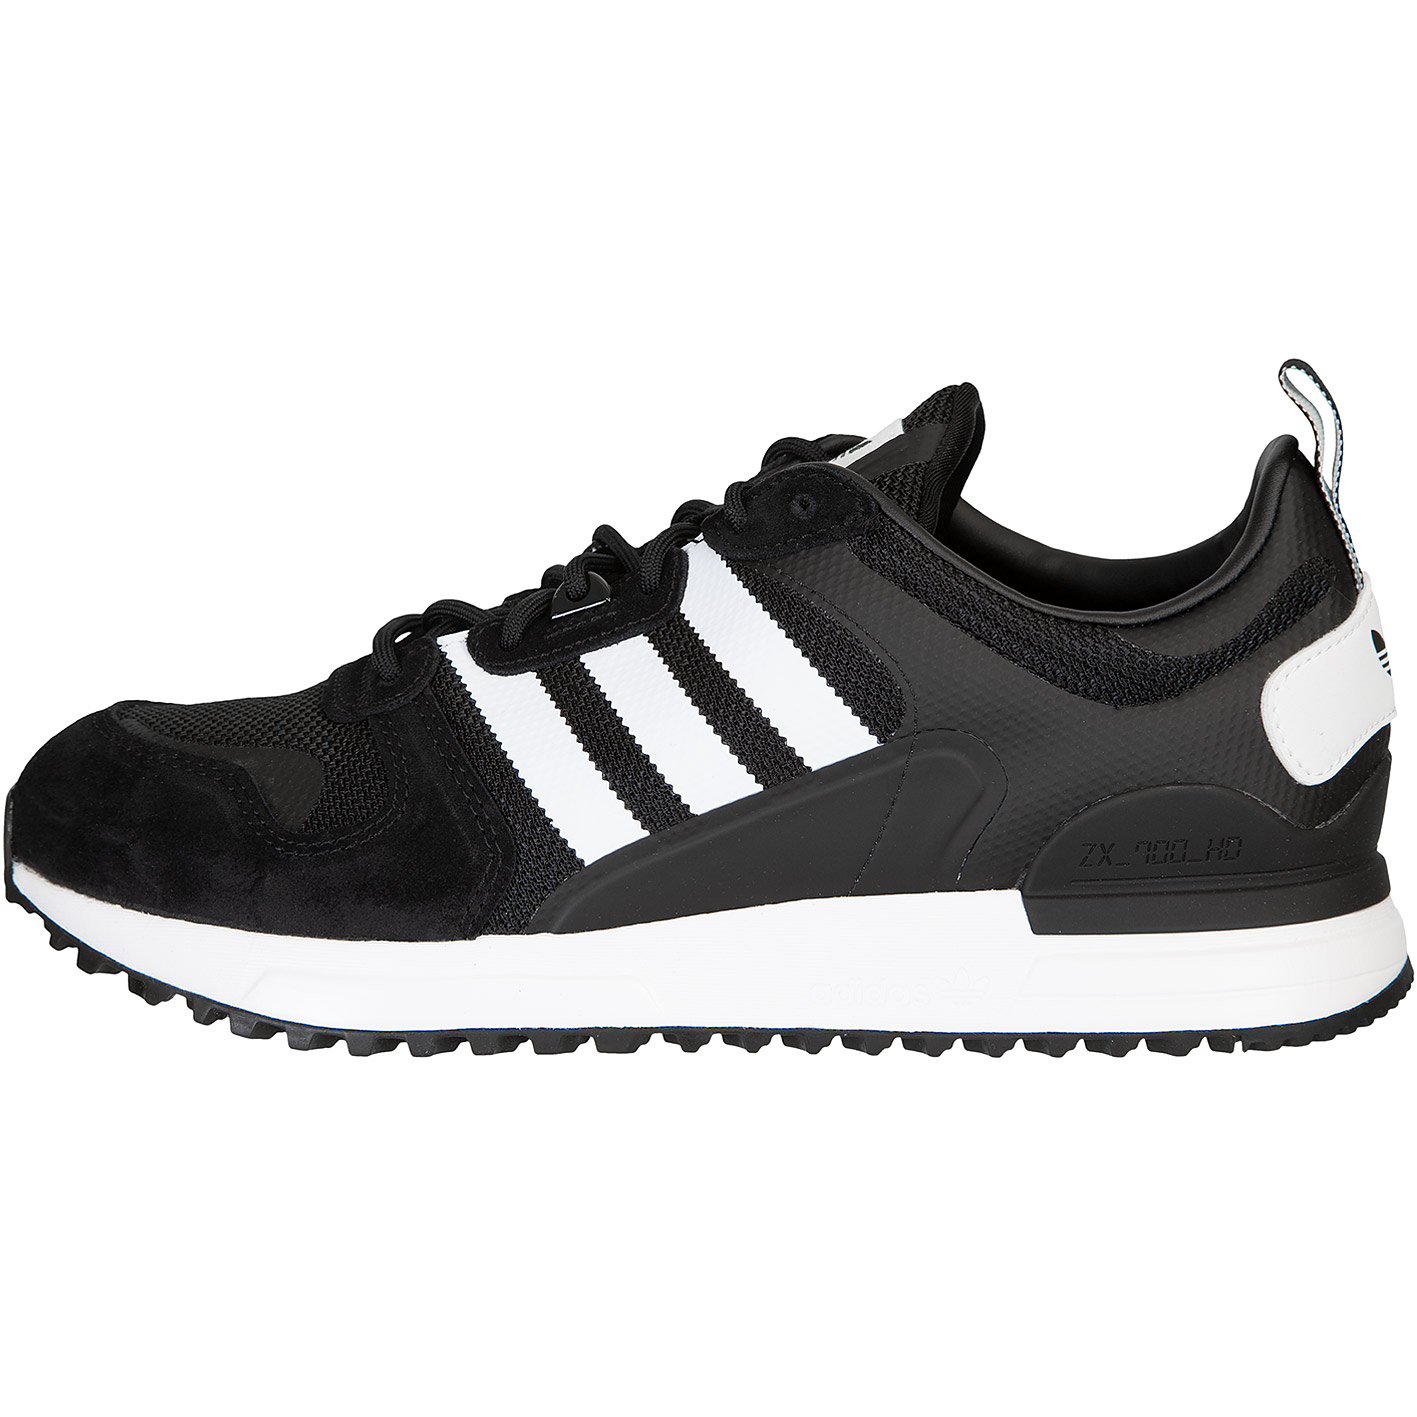 ☆ Adidas ZX 700 HD Sneaker schwarz - hier bestellen!